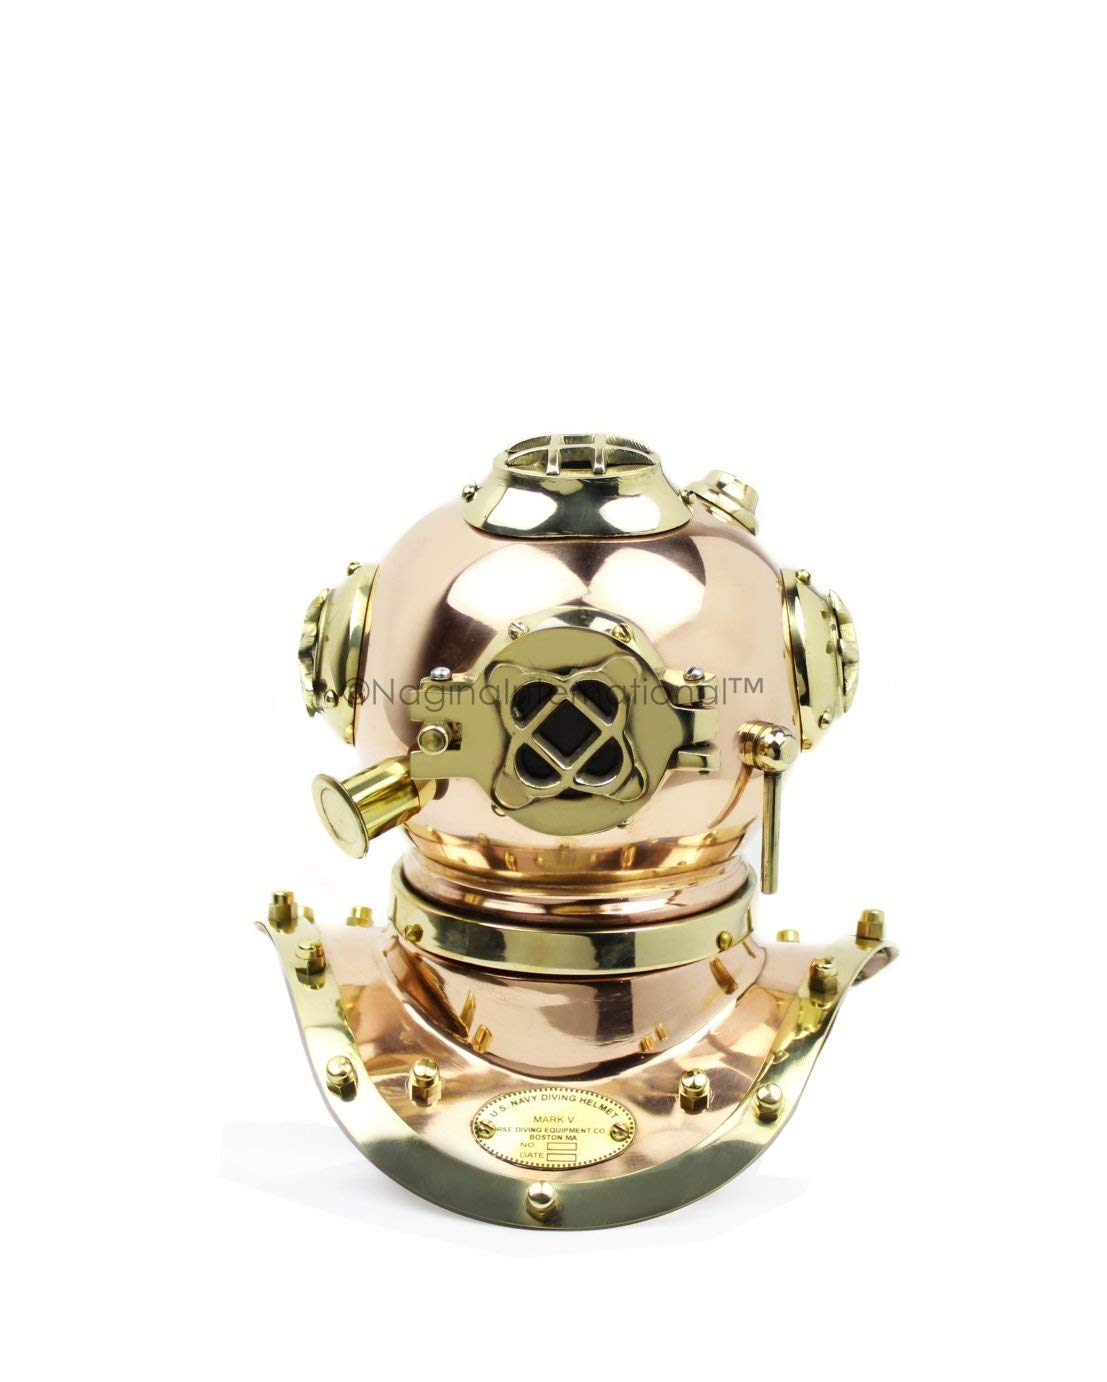 Nagina International 9" Copper Brass Crafted Nautical Diving Helmet | Maritime Home Decor & Gifts